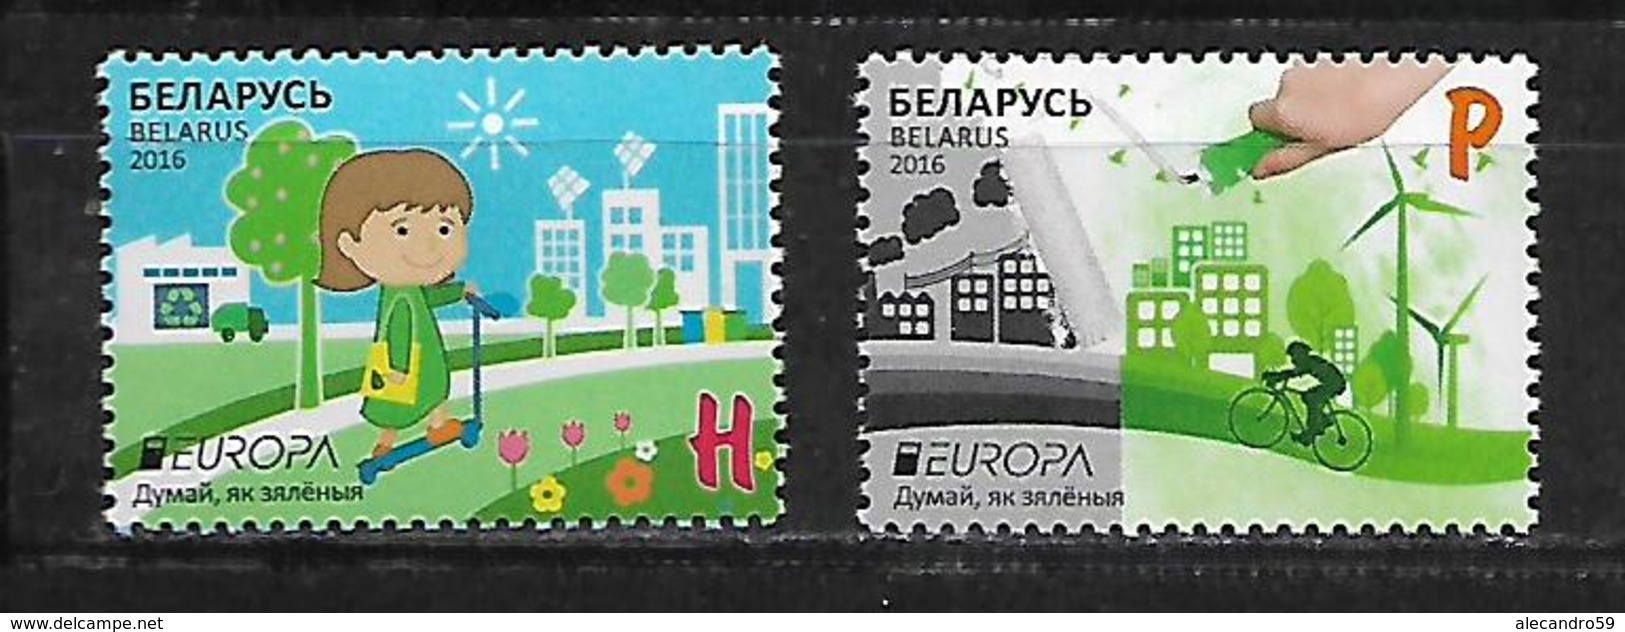 Belarus 2016 EUROPA Stamps - Think Green  MNH - Belarus